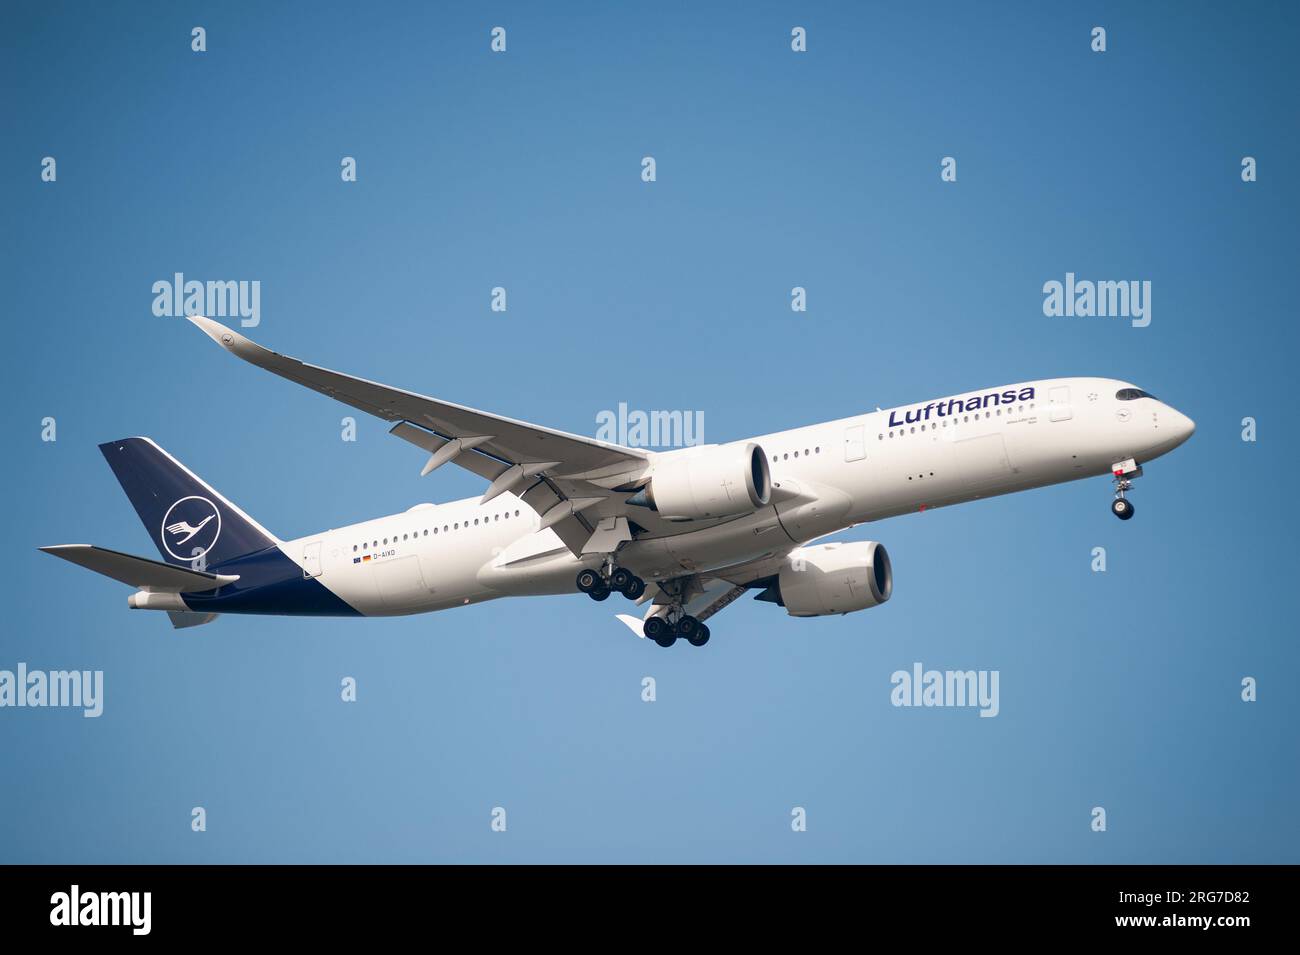 26.07.2023, Singapur, Republik Singapur, Asien - Lufthansa Airbus A350-900 Passagierflugzeug nähert sich Changi International Airport zur Landung. Stockfoto